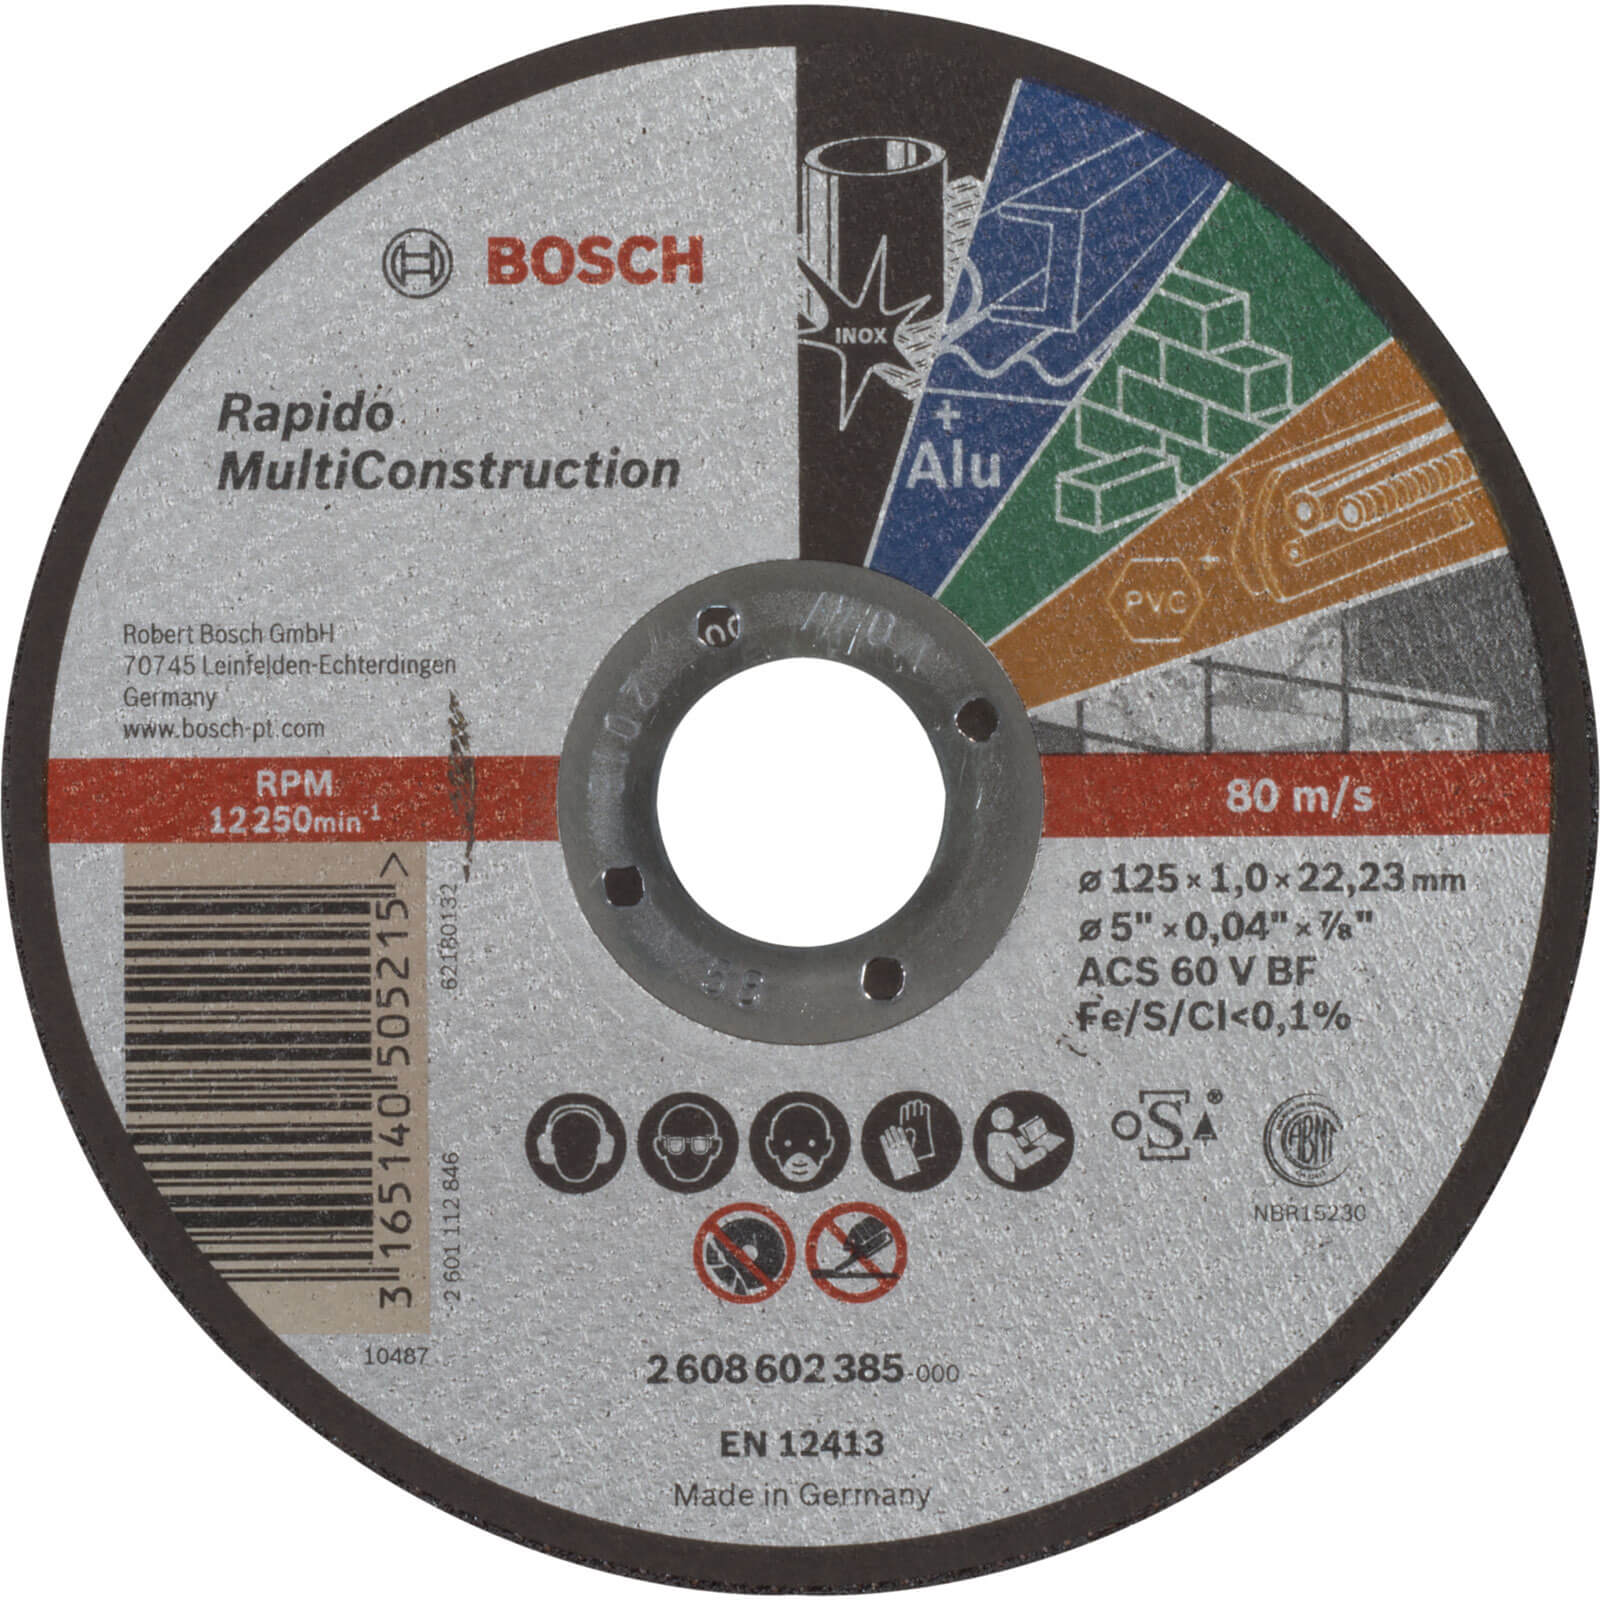 Photo of Bosch Rapido Multiconstruction Cutting Disc 125mm 1mm 22mm